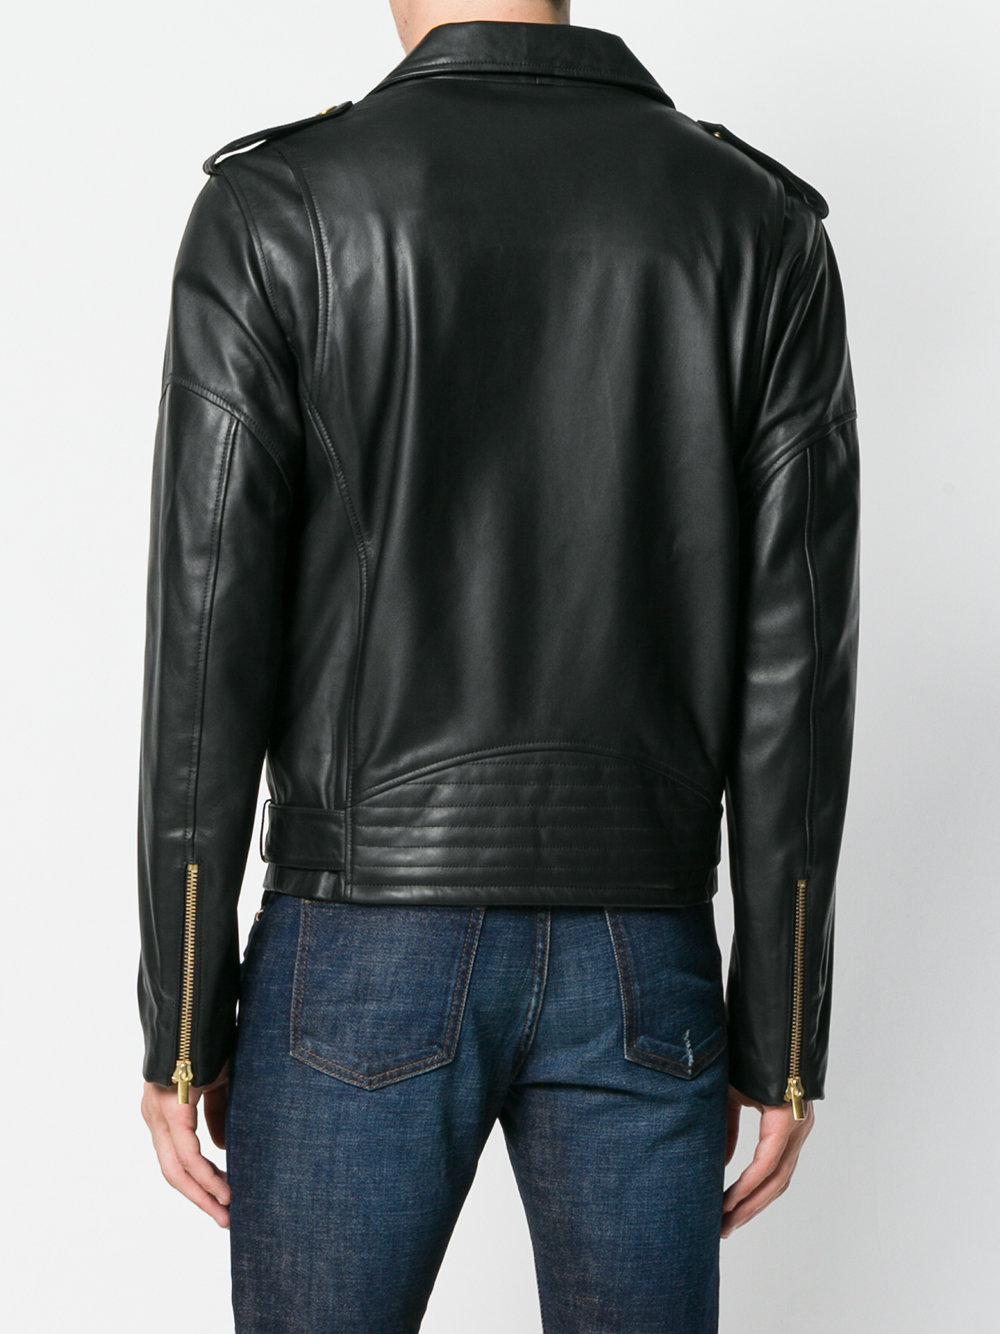 Class Roberto Cavalli Synthetic Zipped Biker Jacket in Black for Men - Lyst